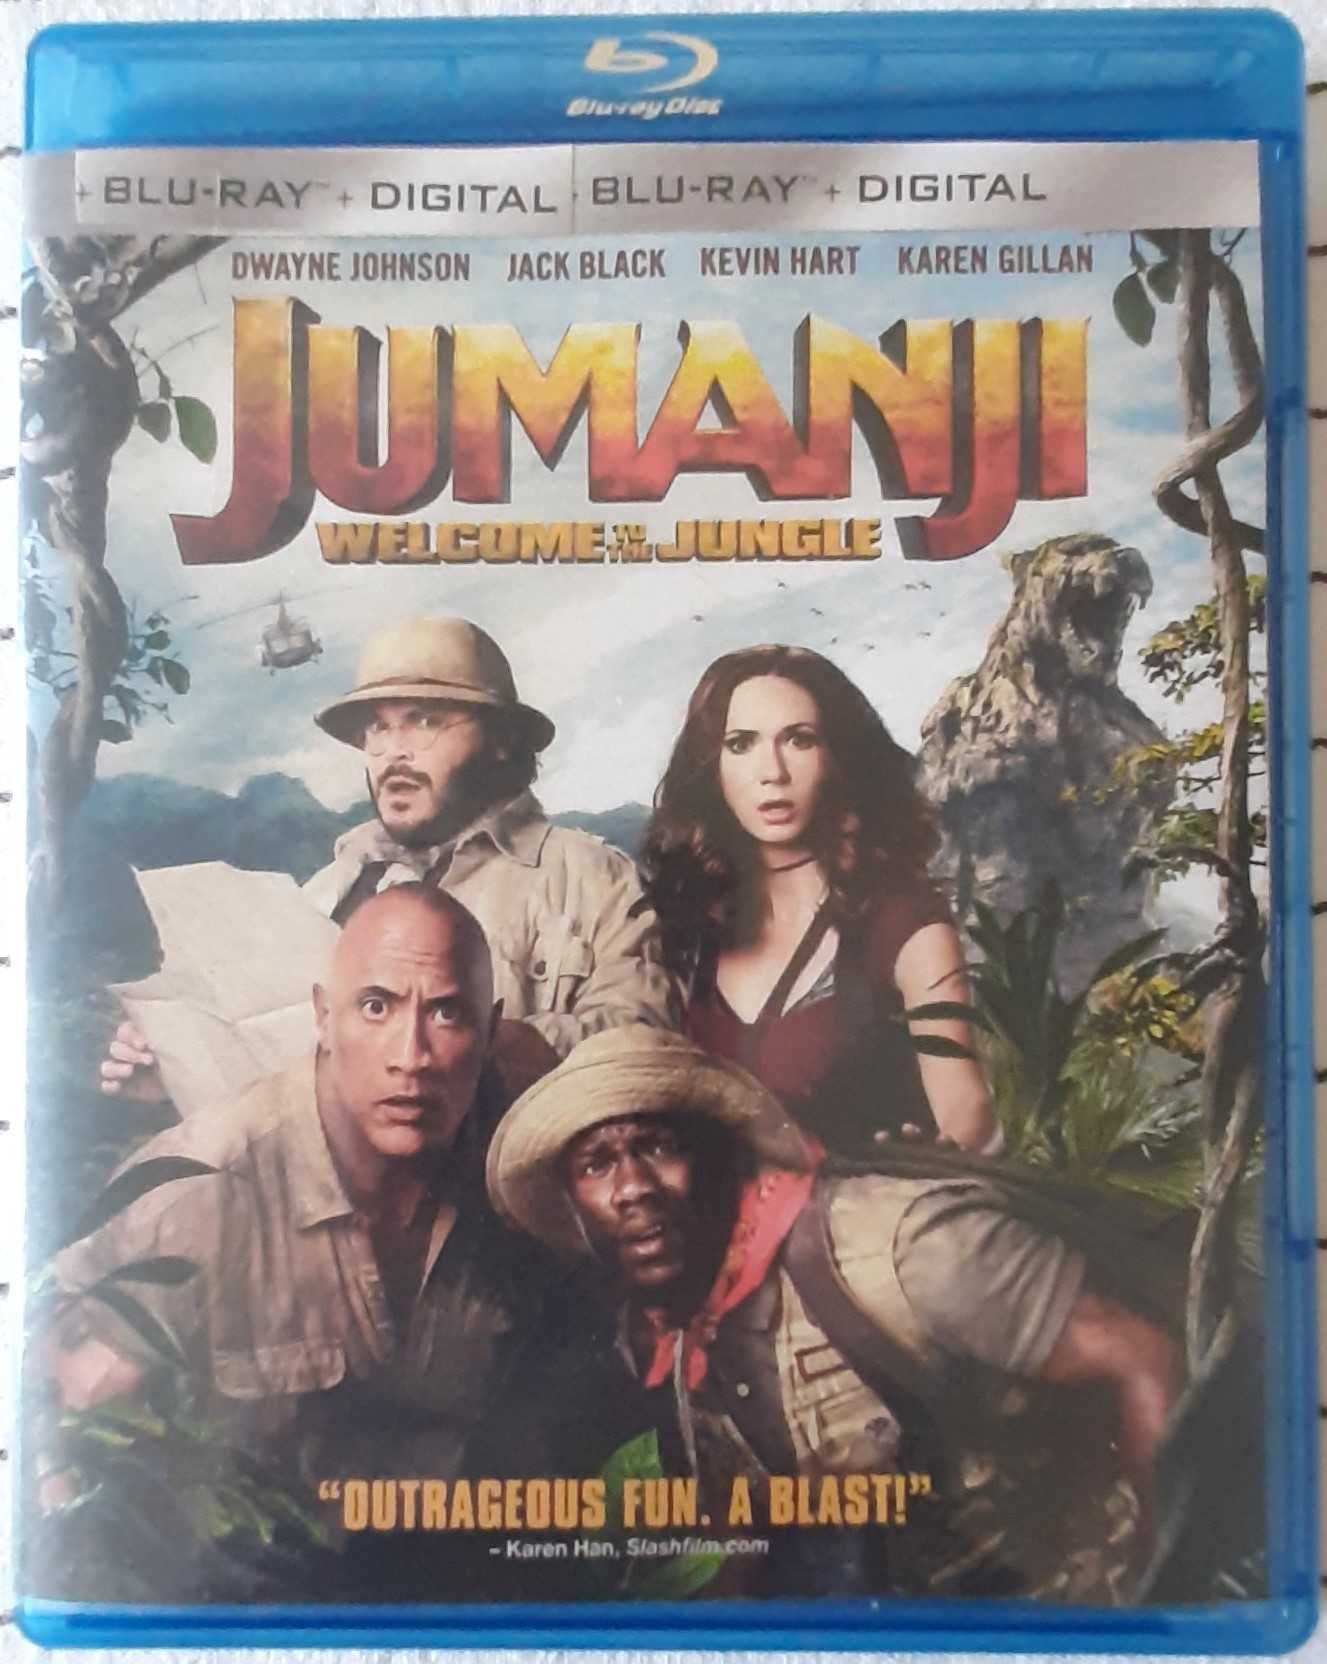 JUMANJI  2 Witamy w dżungli  Blu-Ray x 1  + code  ENG